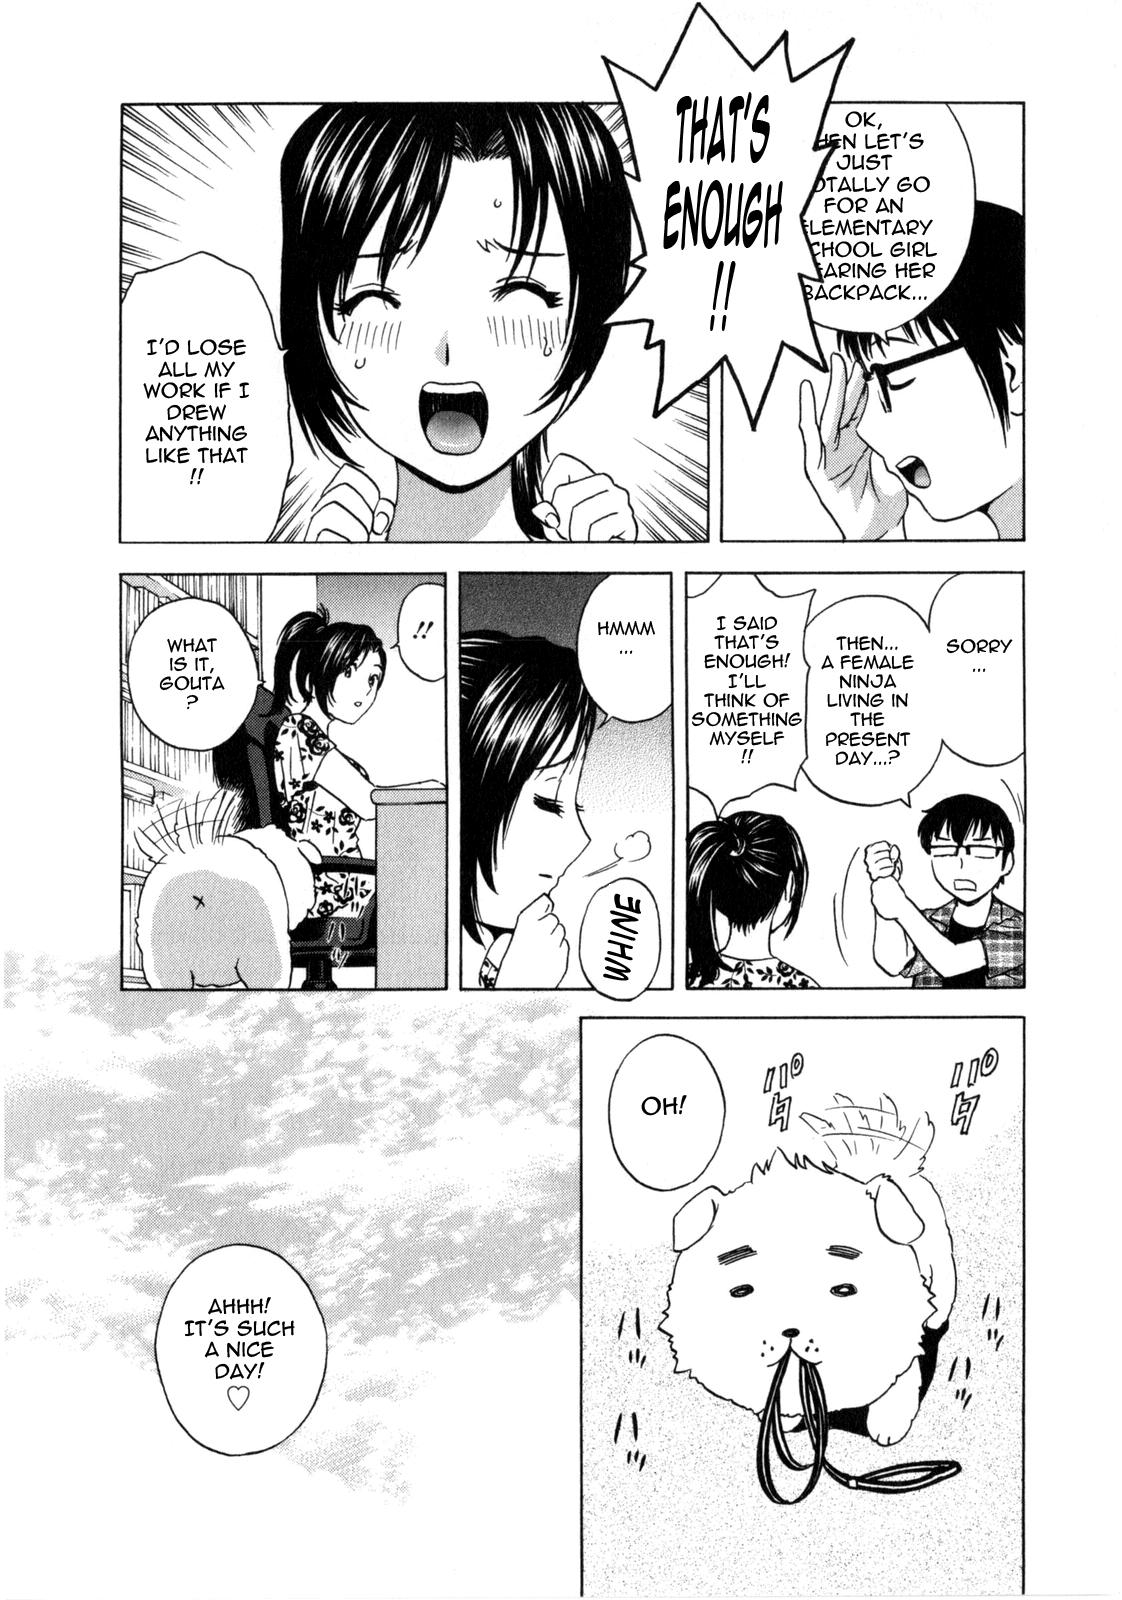 [Hidemaru] Life with Married Women Just Like a Manga 1 - Ch. 1-8 [English] {Tadanohito} 145